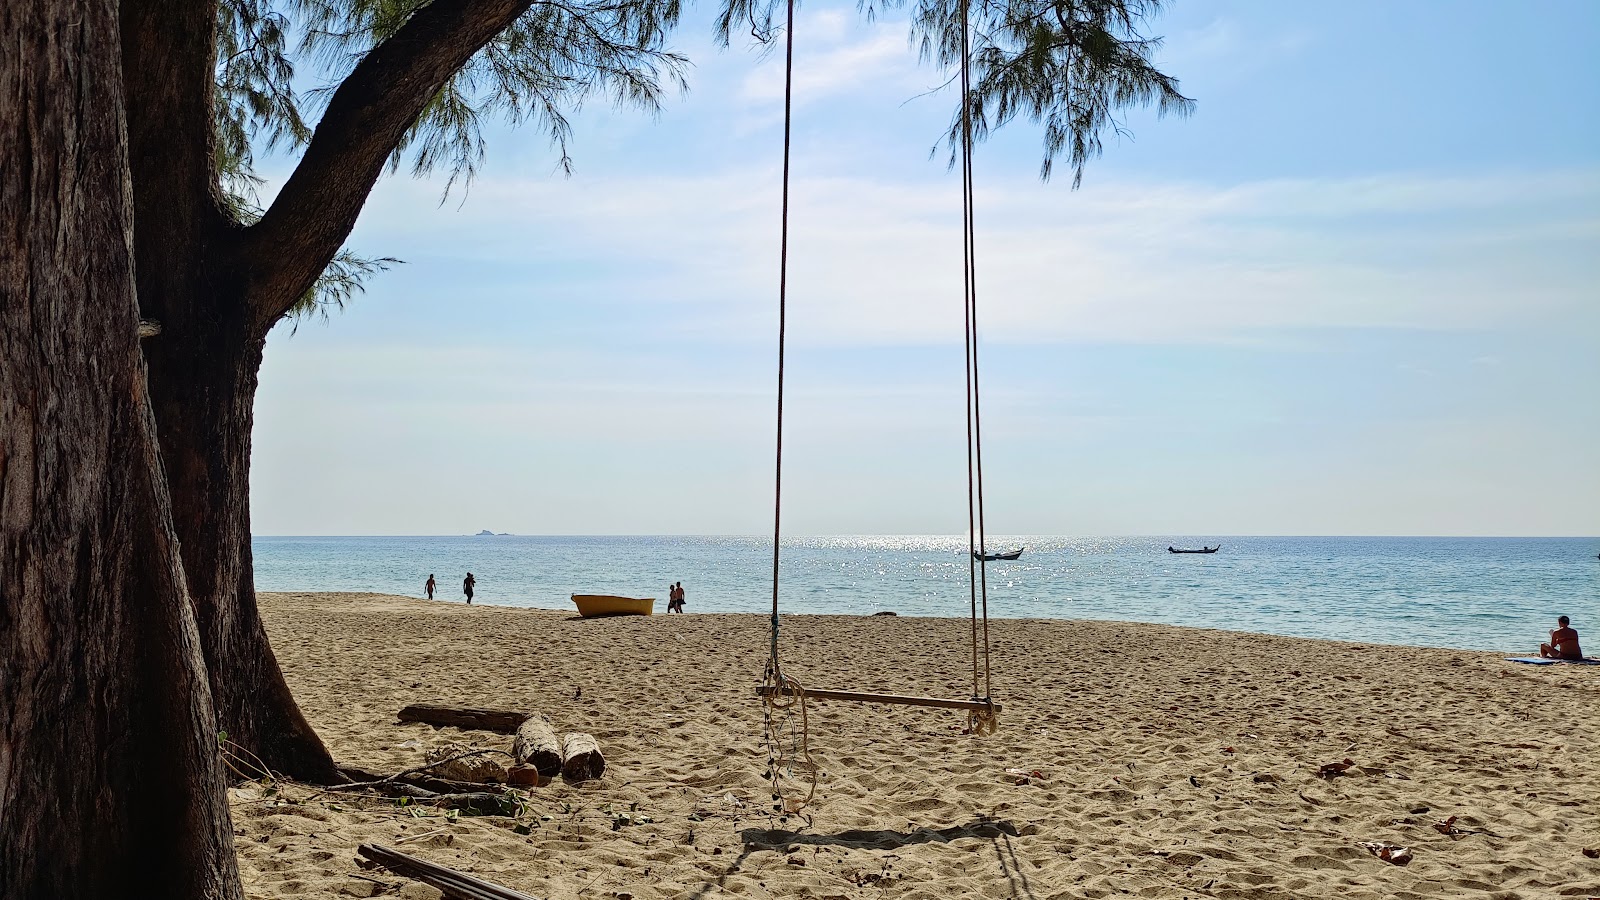 Fotografie cu Nai Thon Beach - locul popular printre cunoscătorii de relaxare